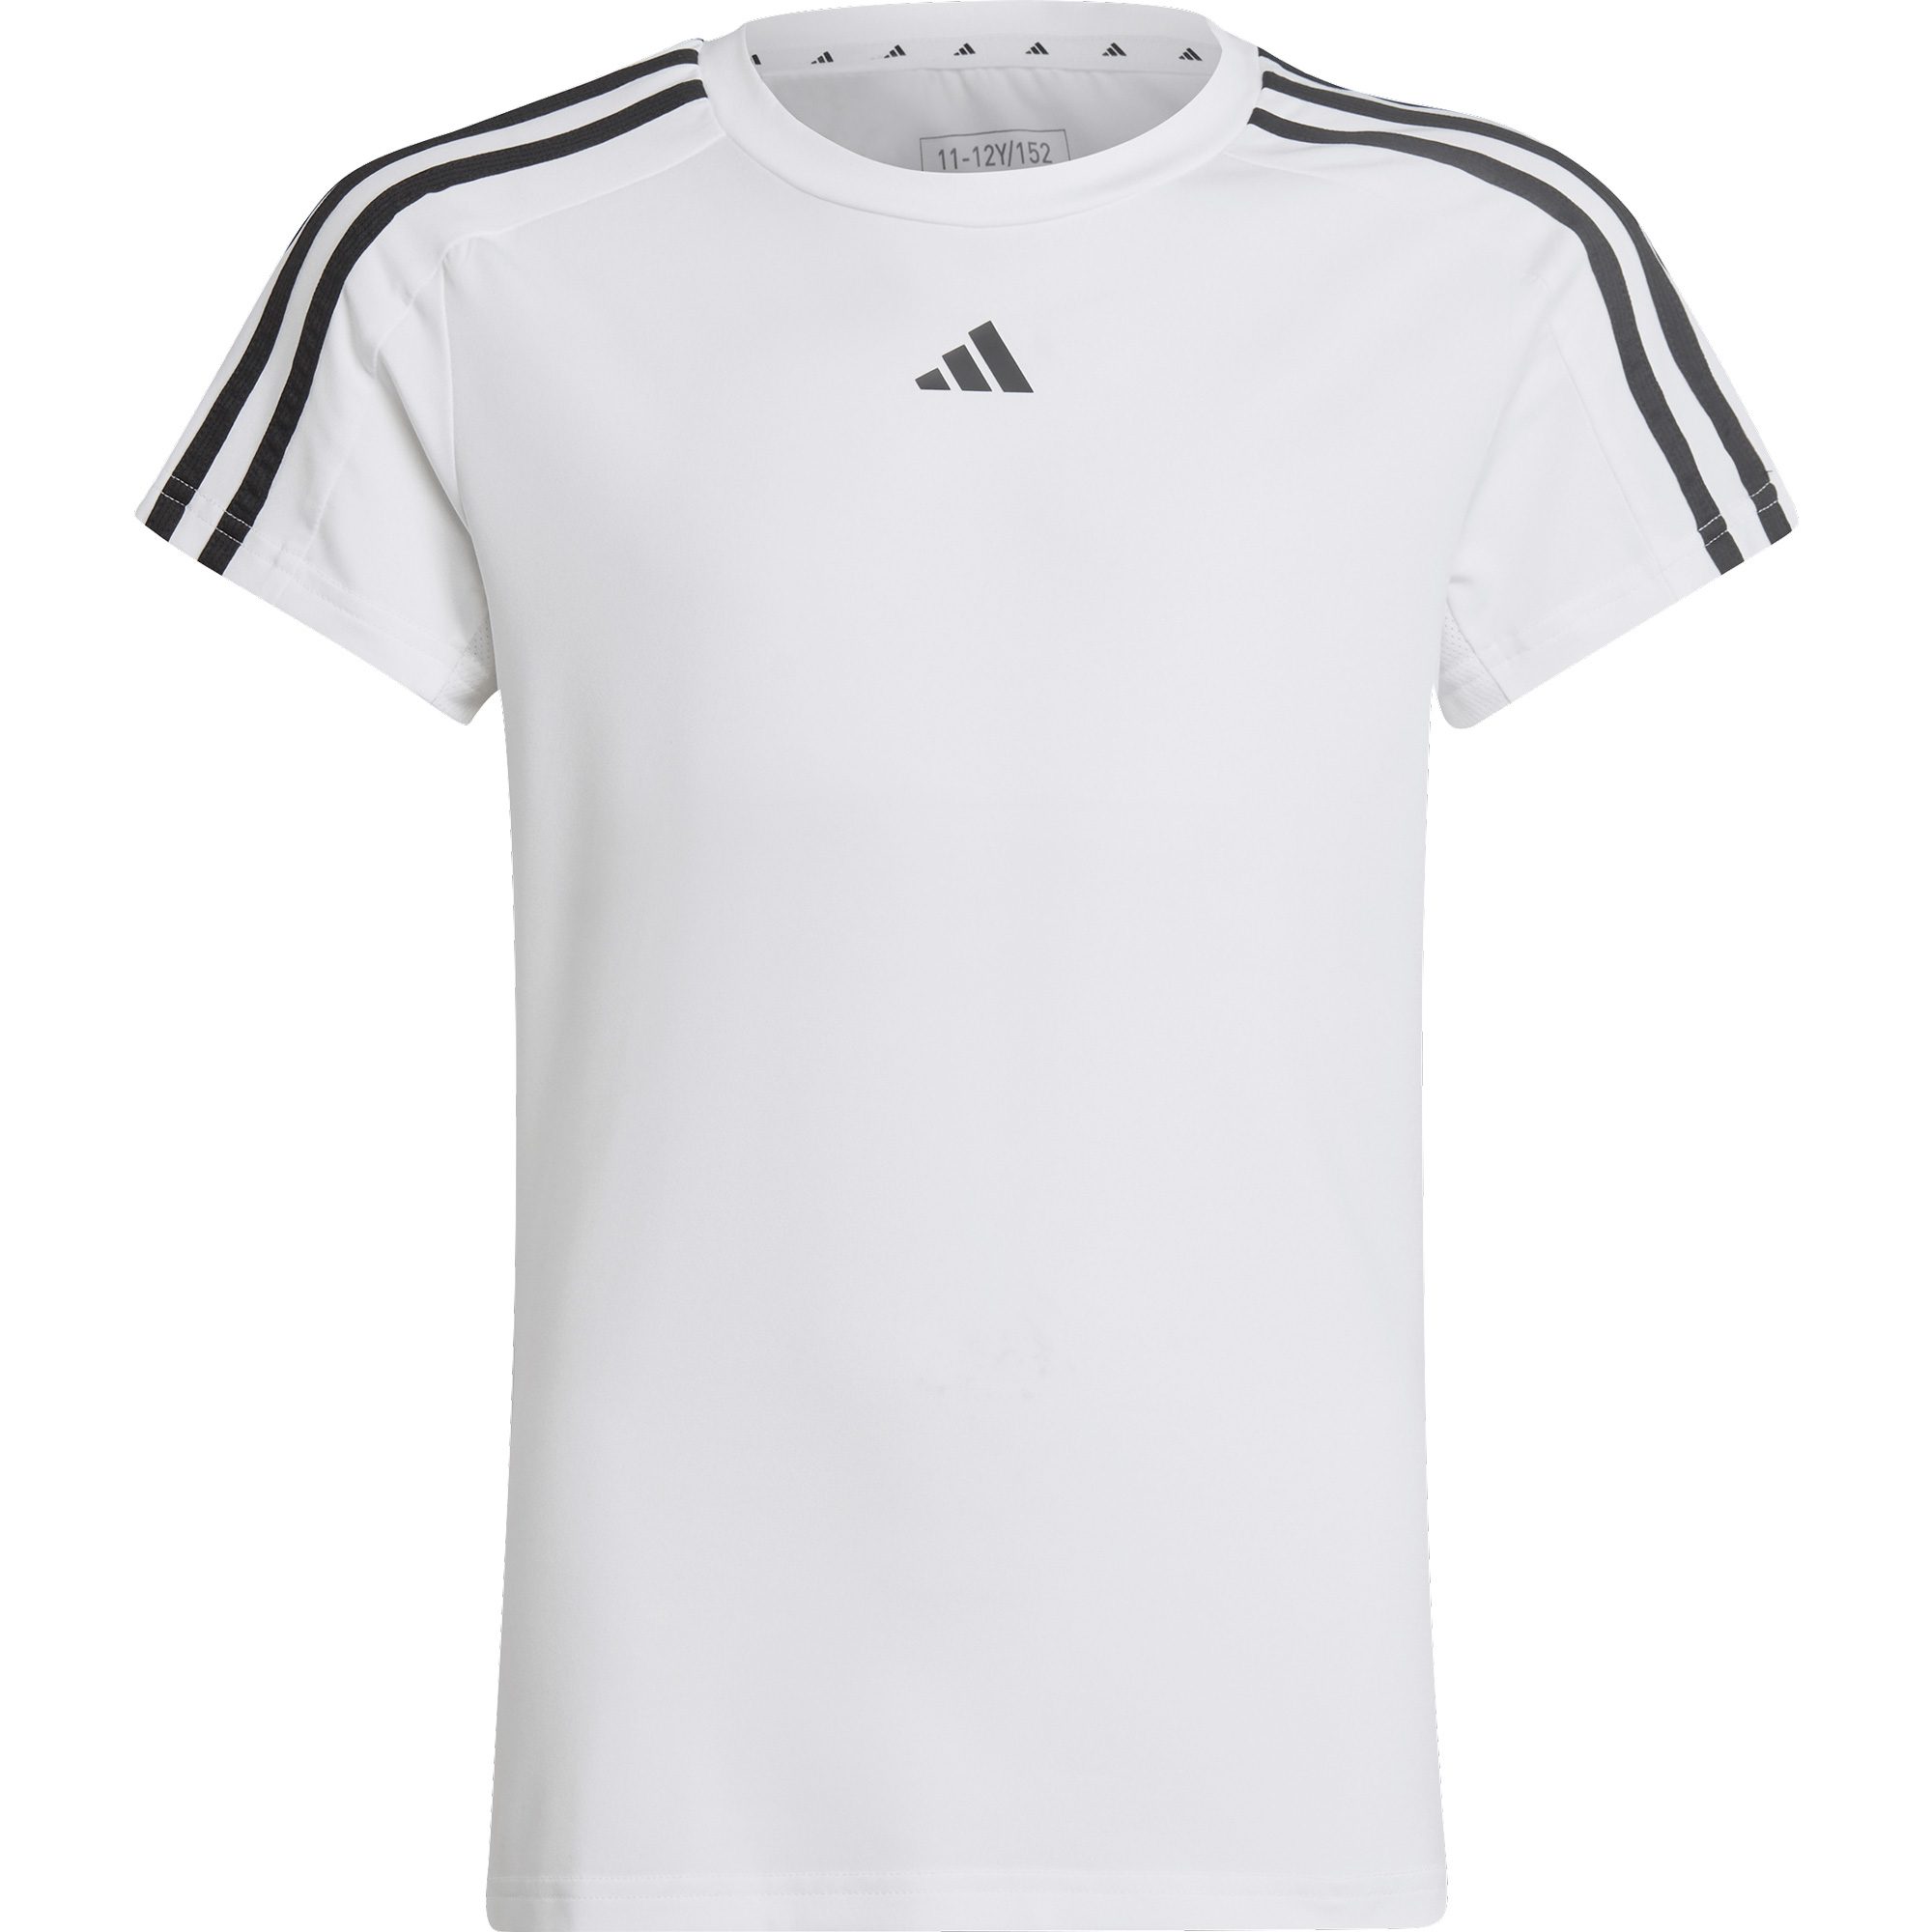 Shop Girls adidas white Essentials at - Bittl T-Shirt Sport Aeroready Train 3-Stripes